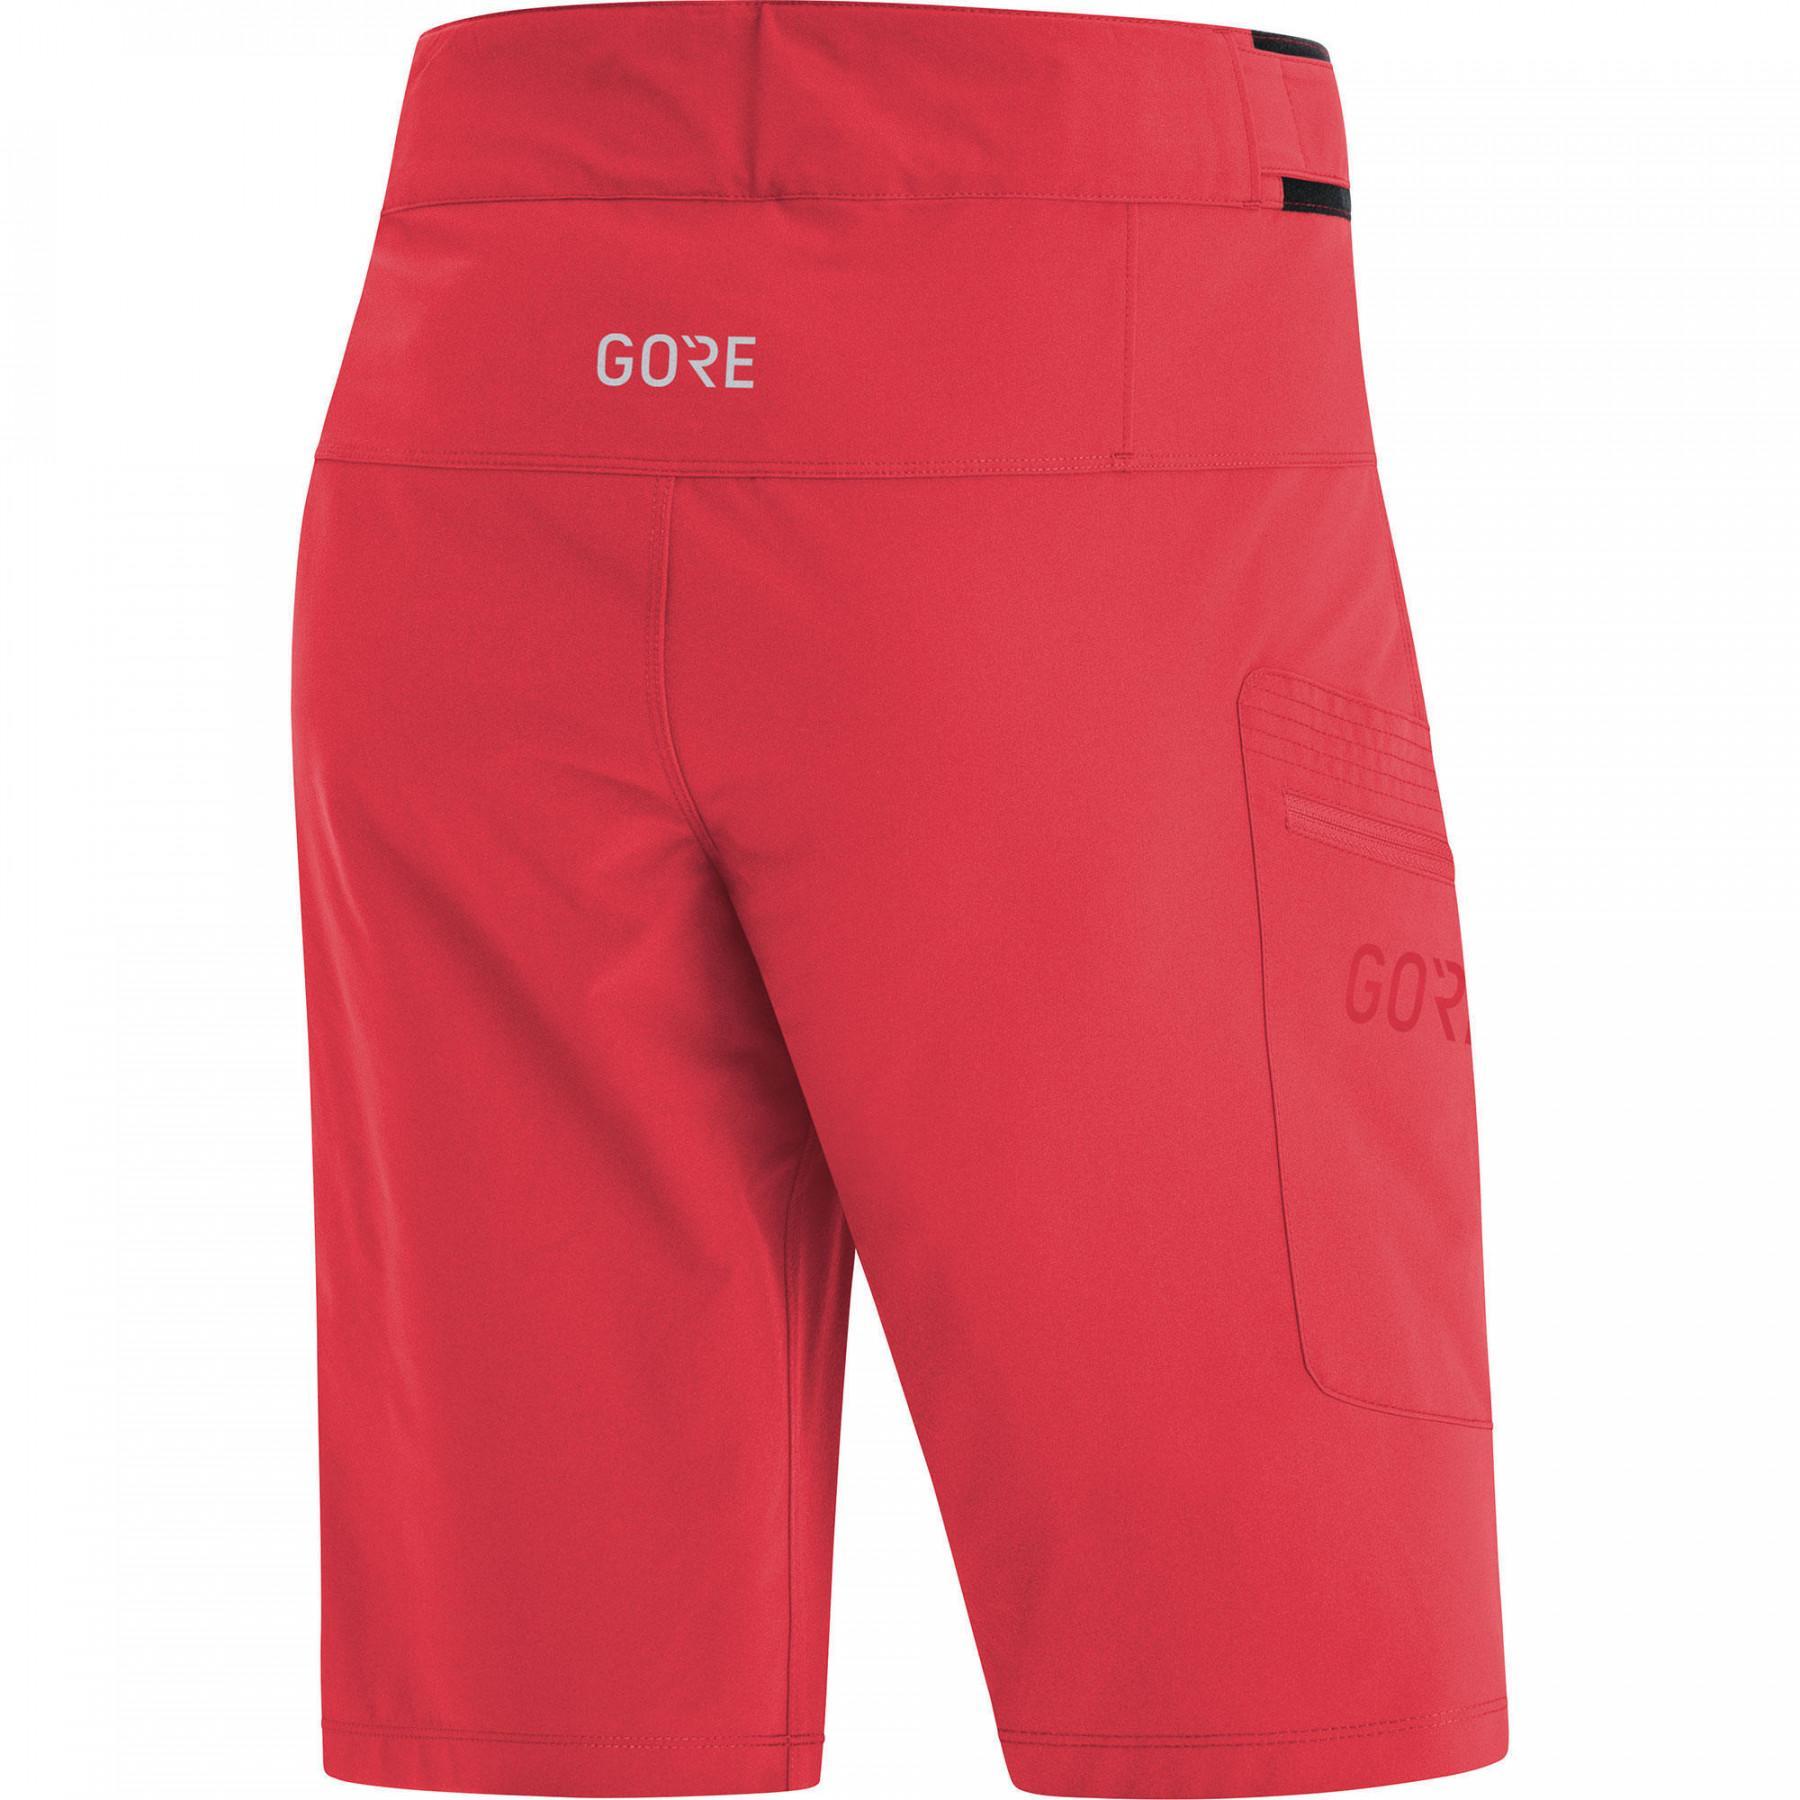 Dames shorts Gore Passion s